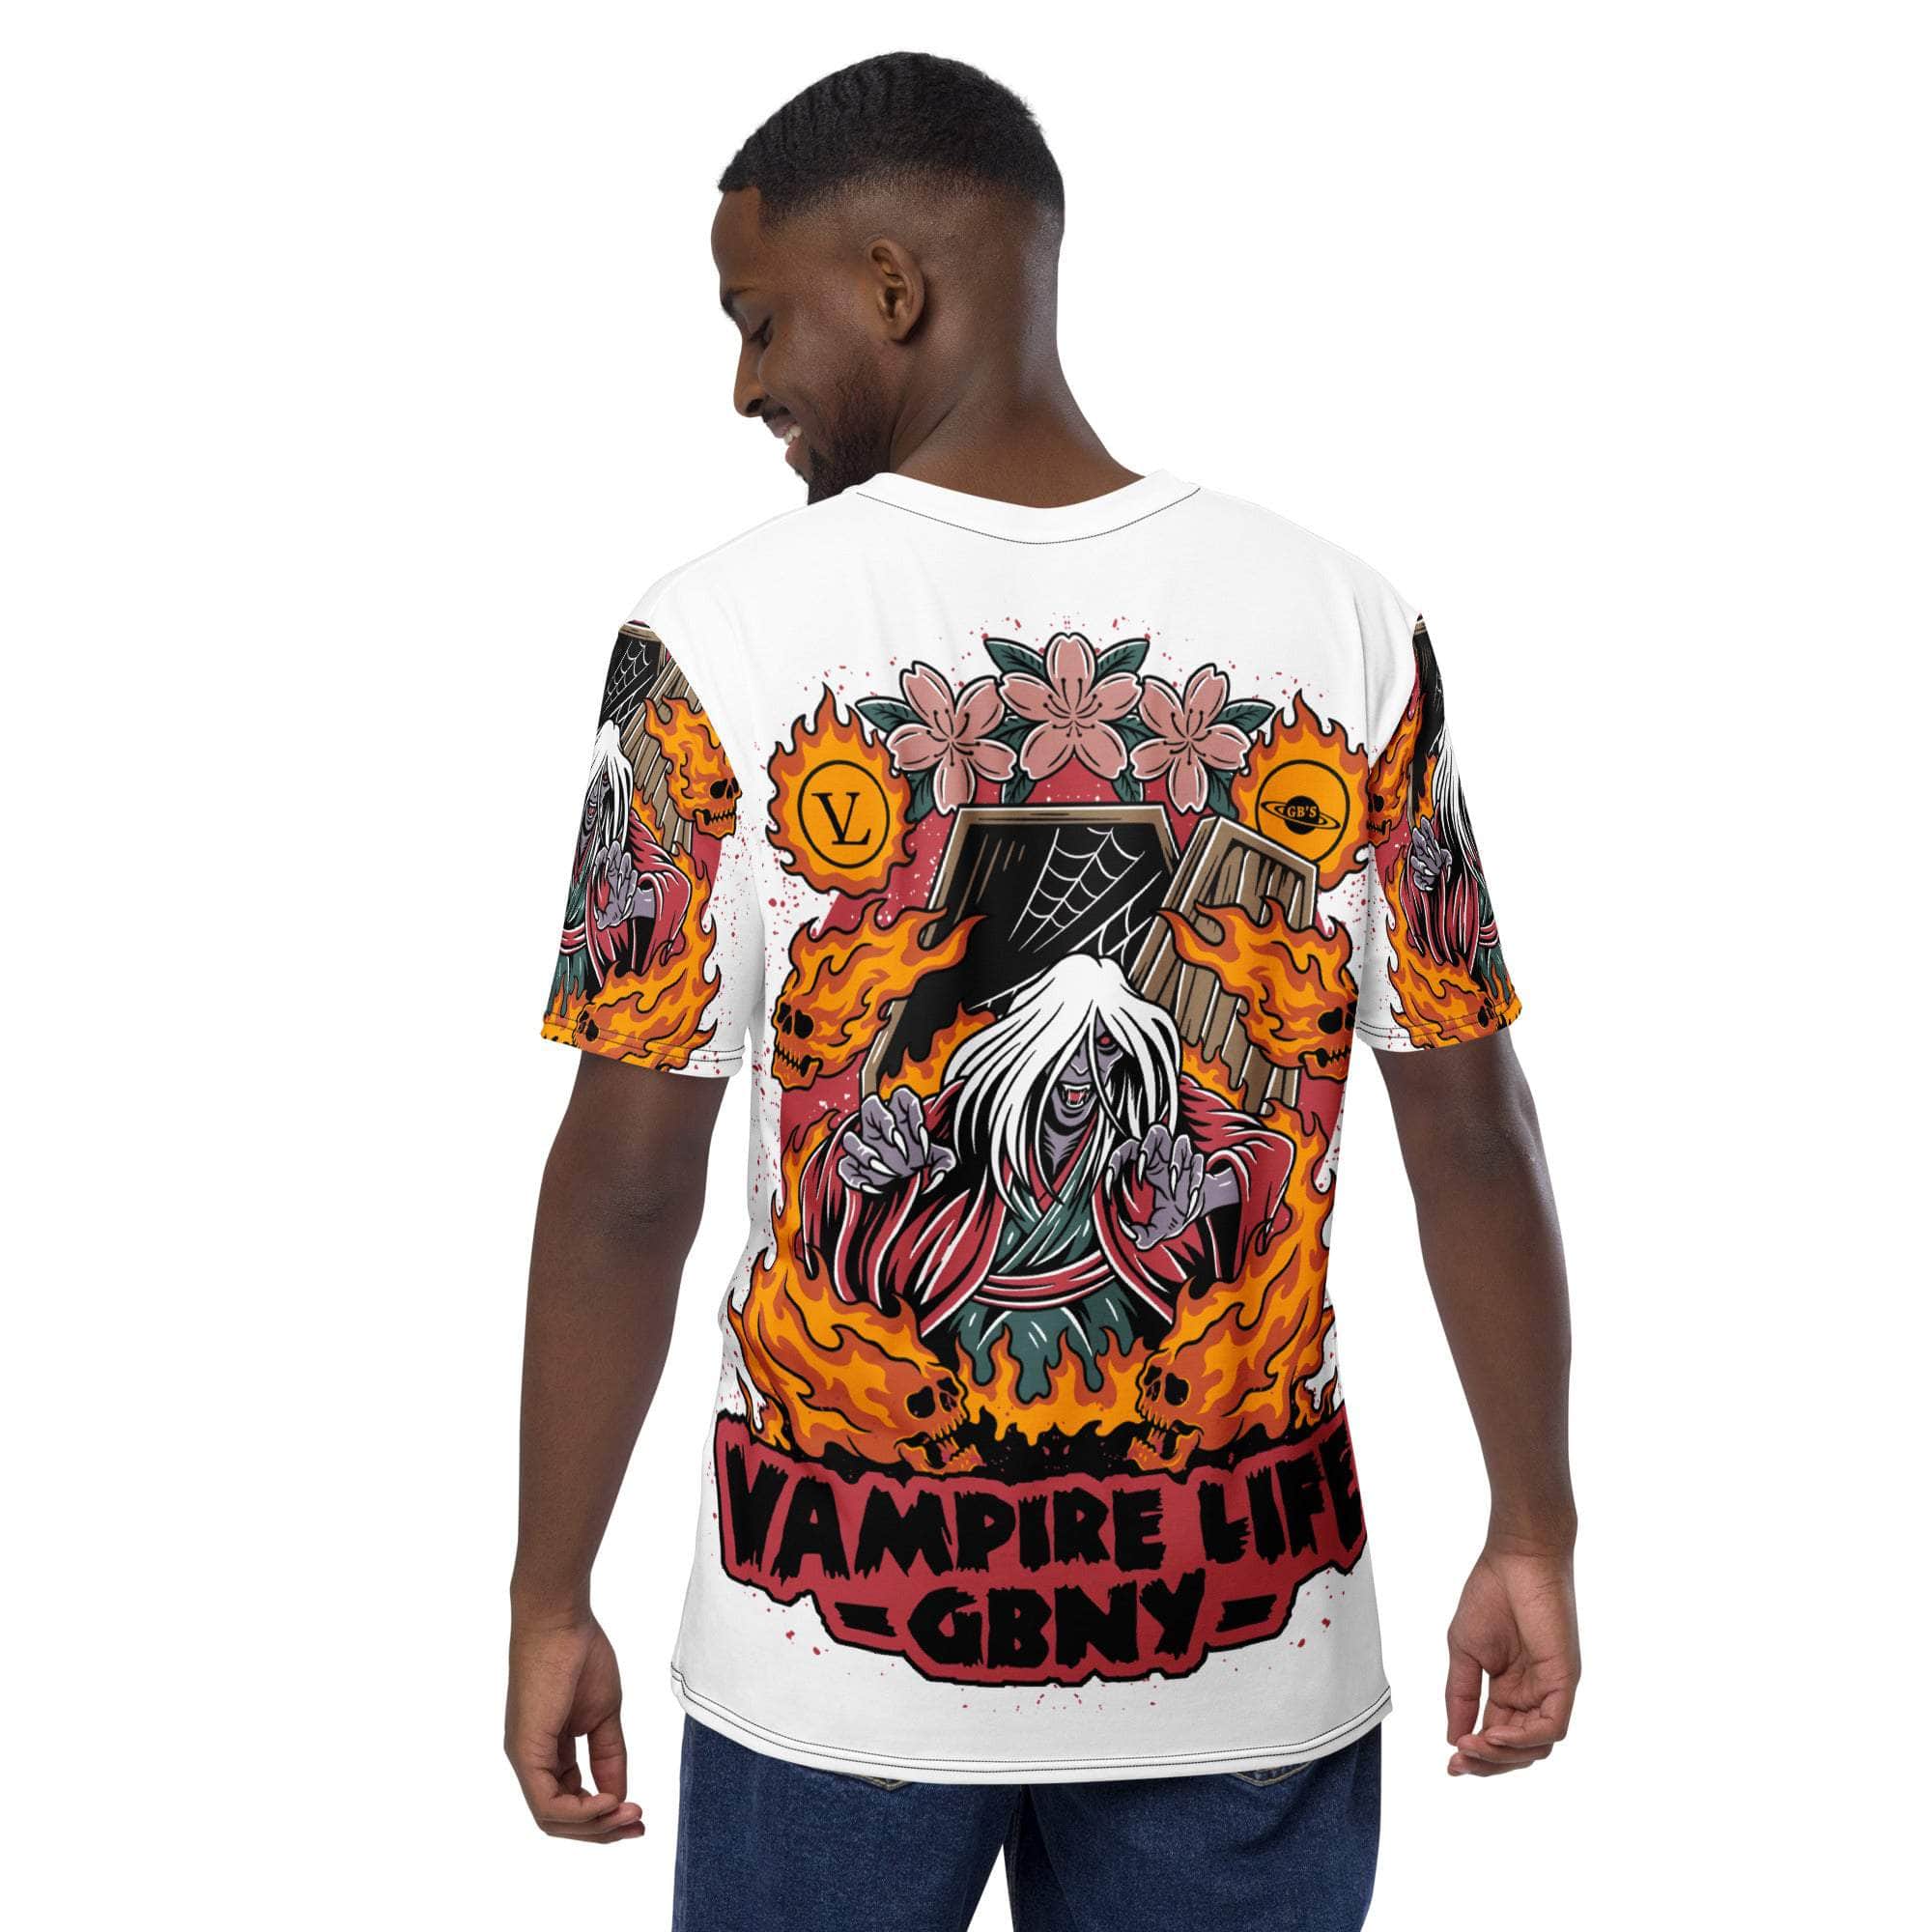 GBNY Vamp Life X GBNY "Fiery Vamp" All Over T-shirt - Men's